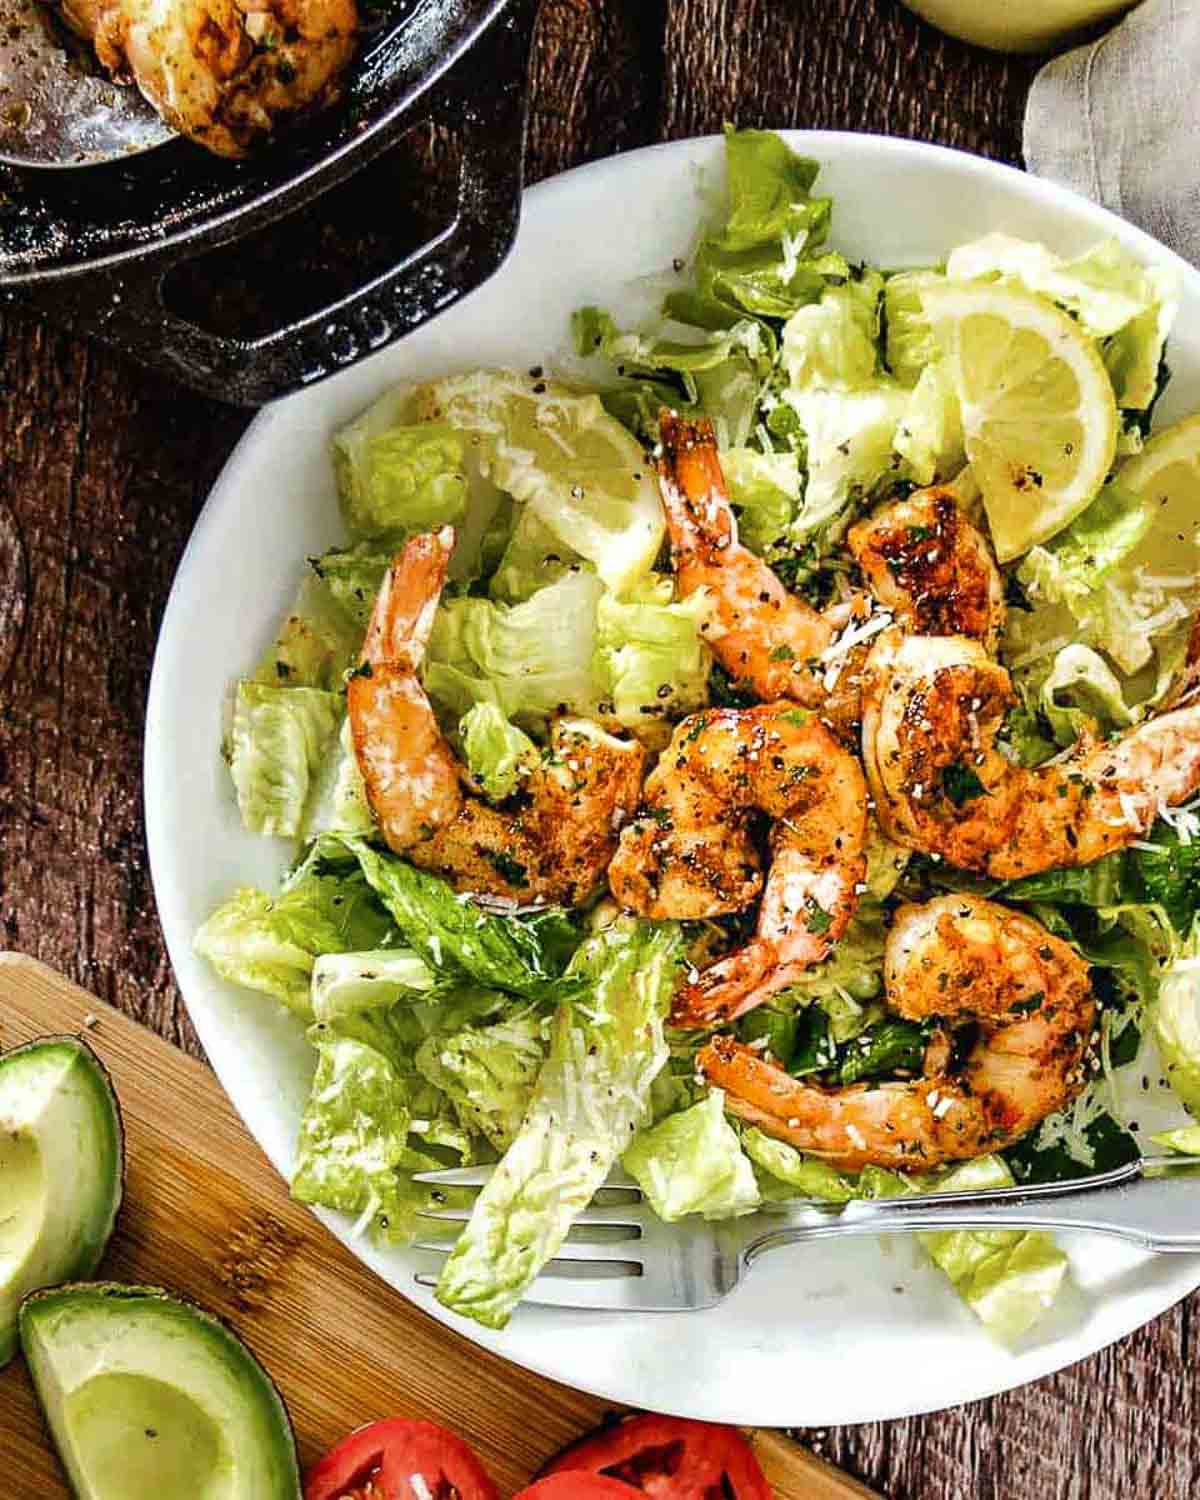 Caesar salad with shrimp on top.